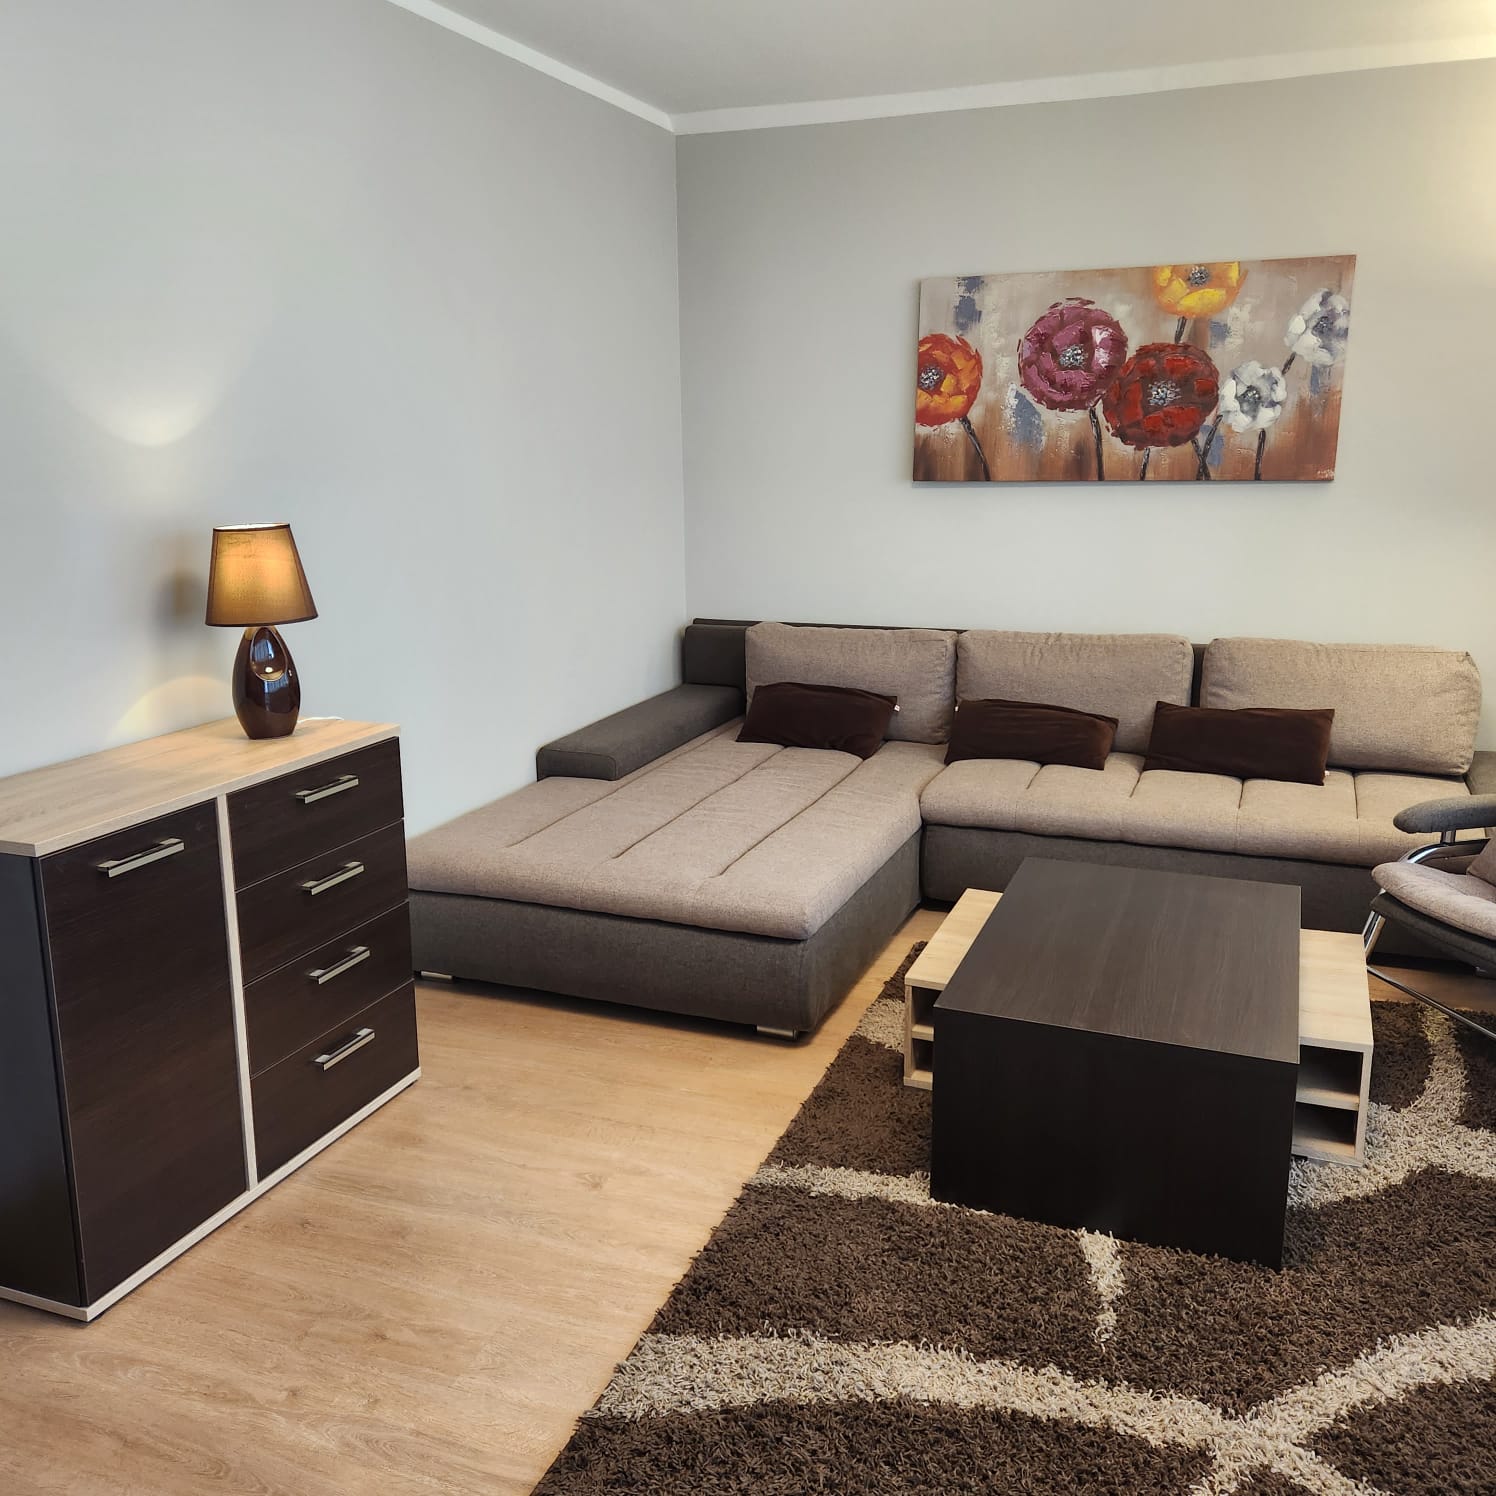 Apartment for rent, Annas Brigaderes street 7 - Image 1